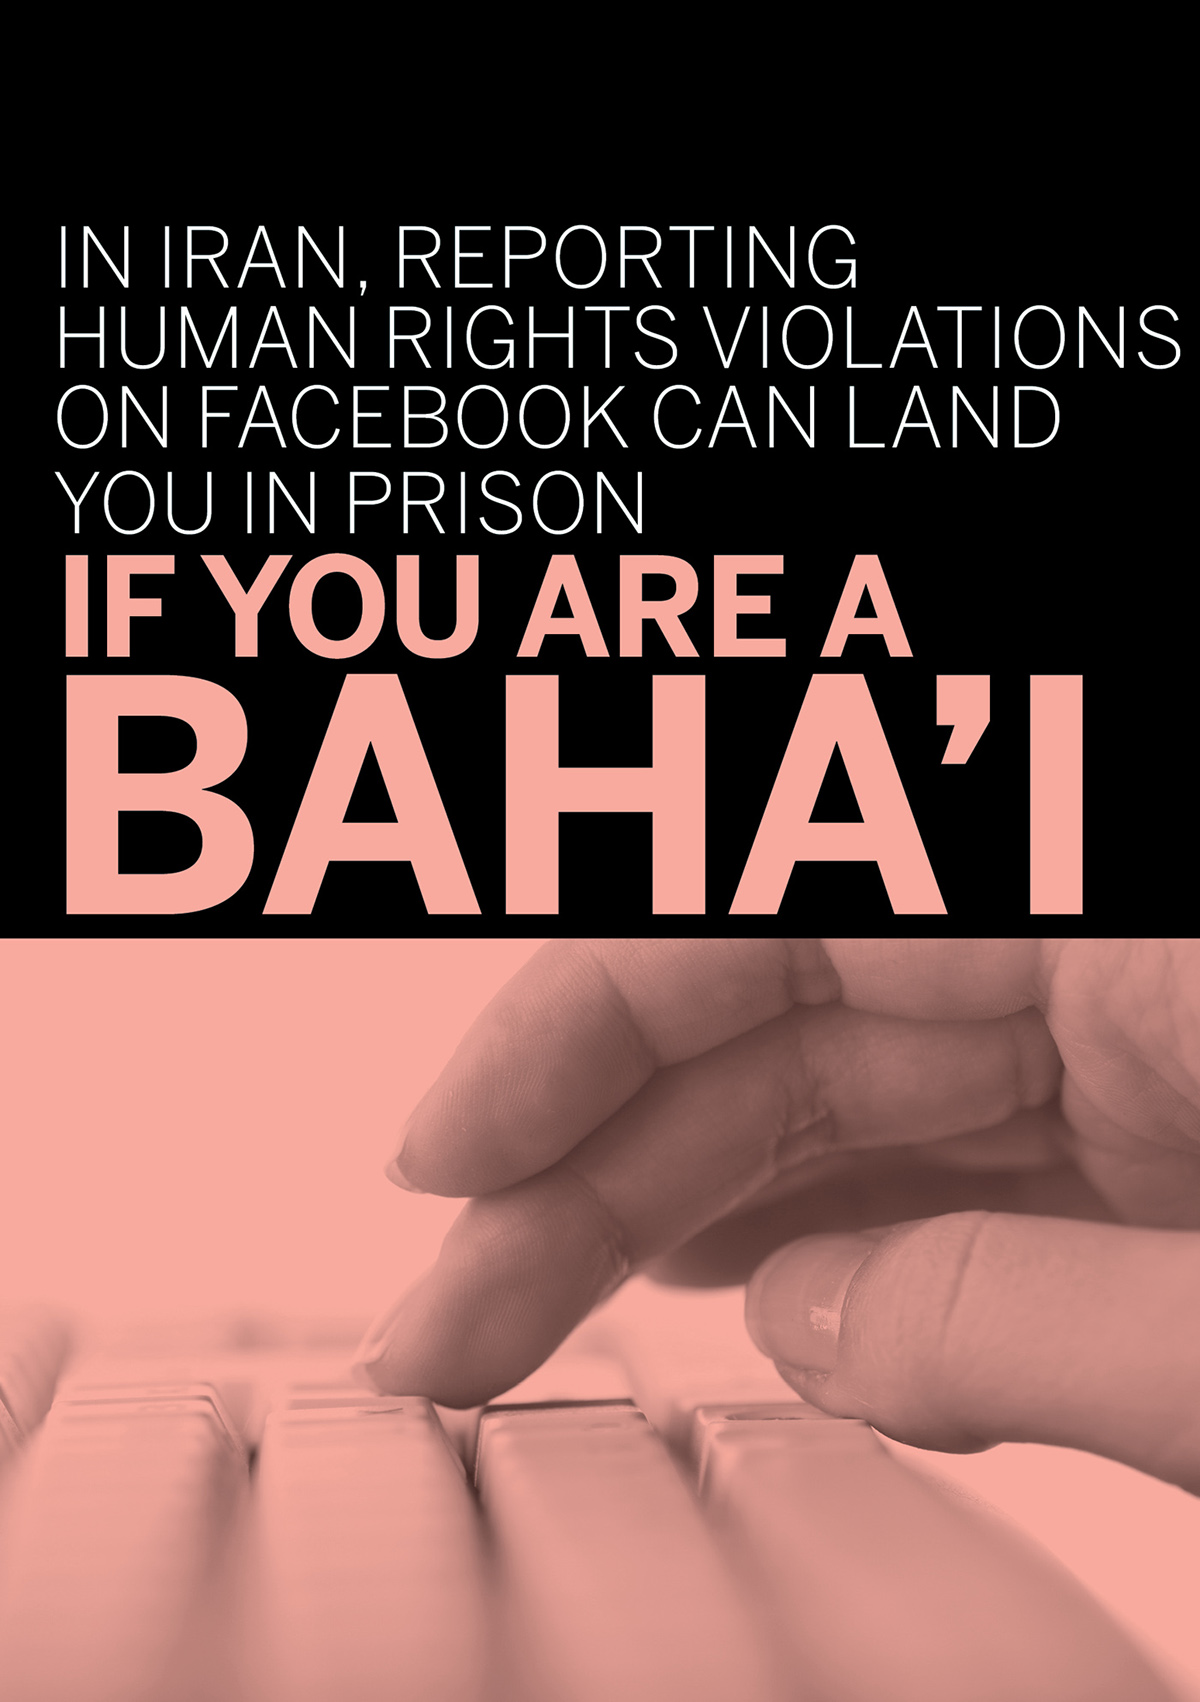 Iran iranian persian baha'i persecution prison Education denial Human rights University Justice freedom